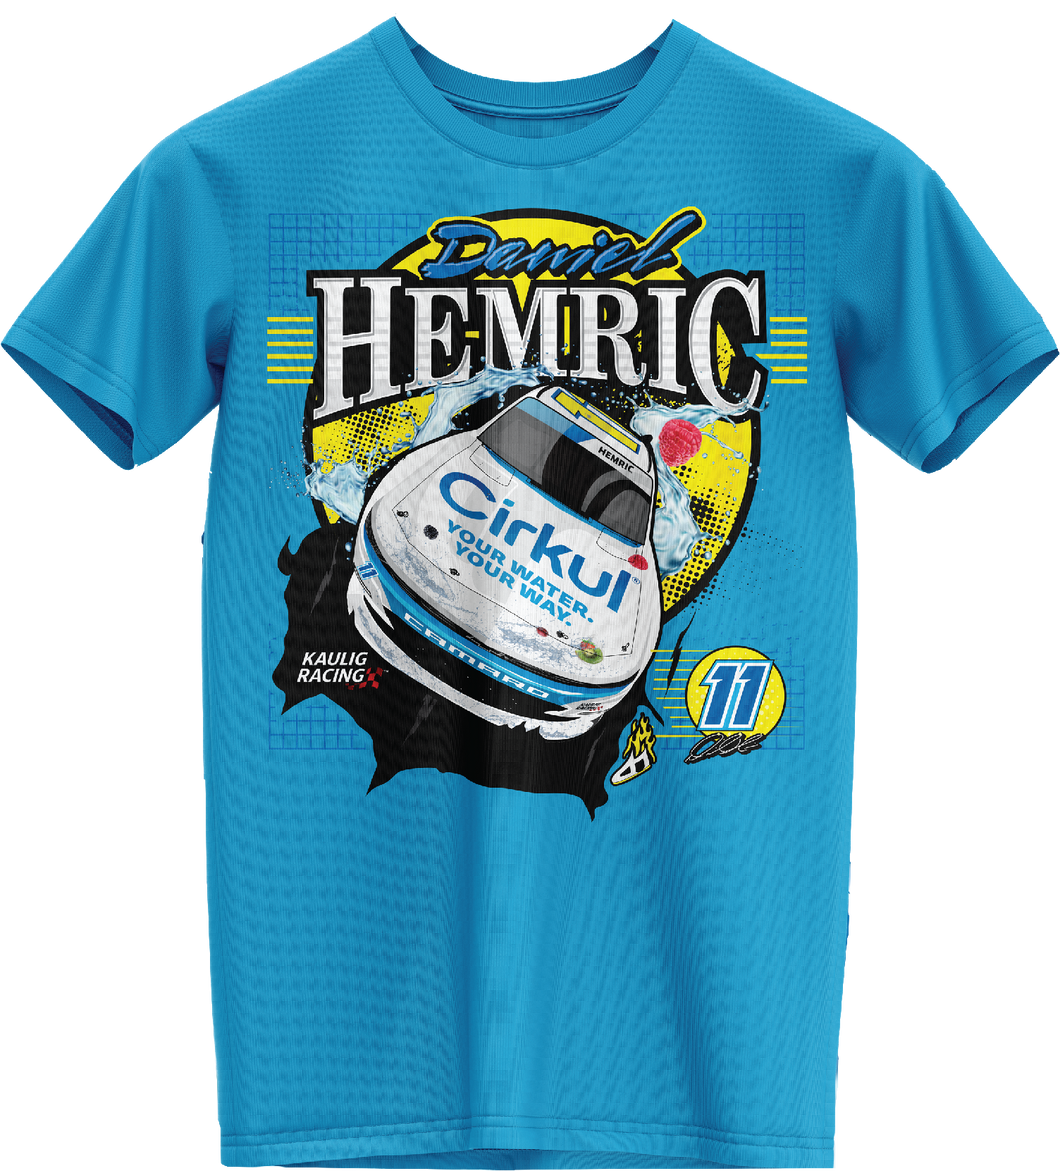 Daniel Hemric 2023 Cirkul Racing Tee